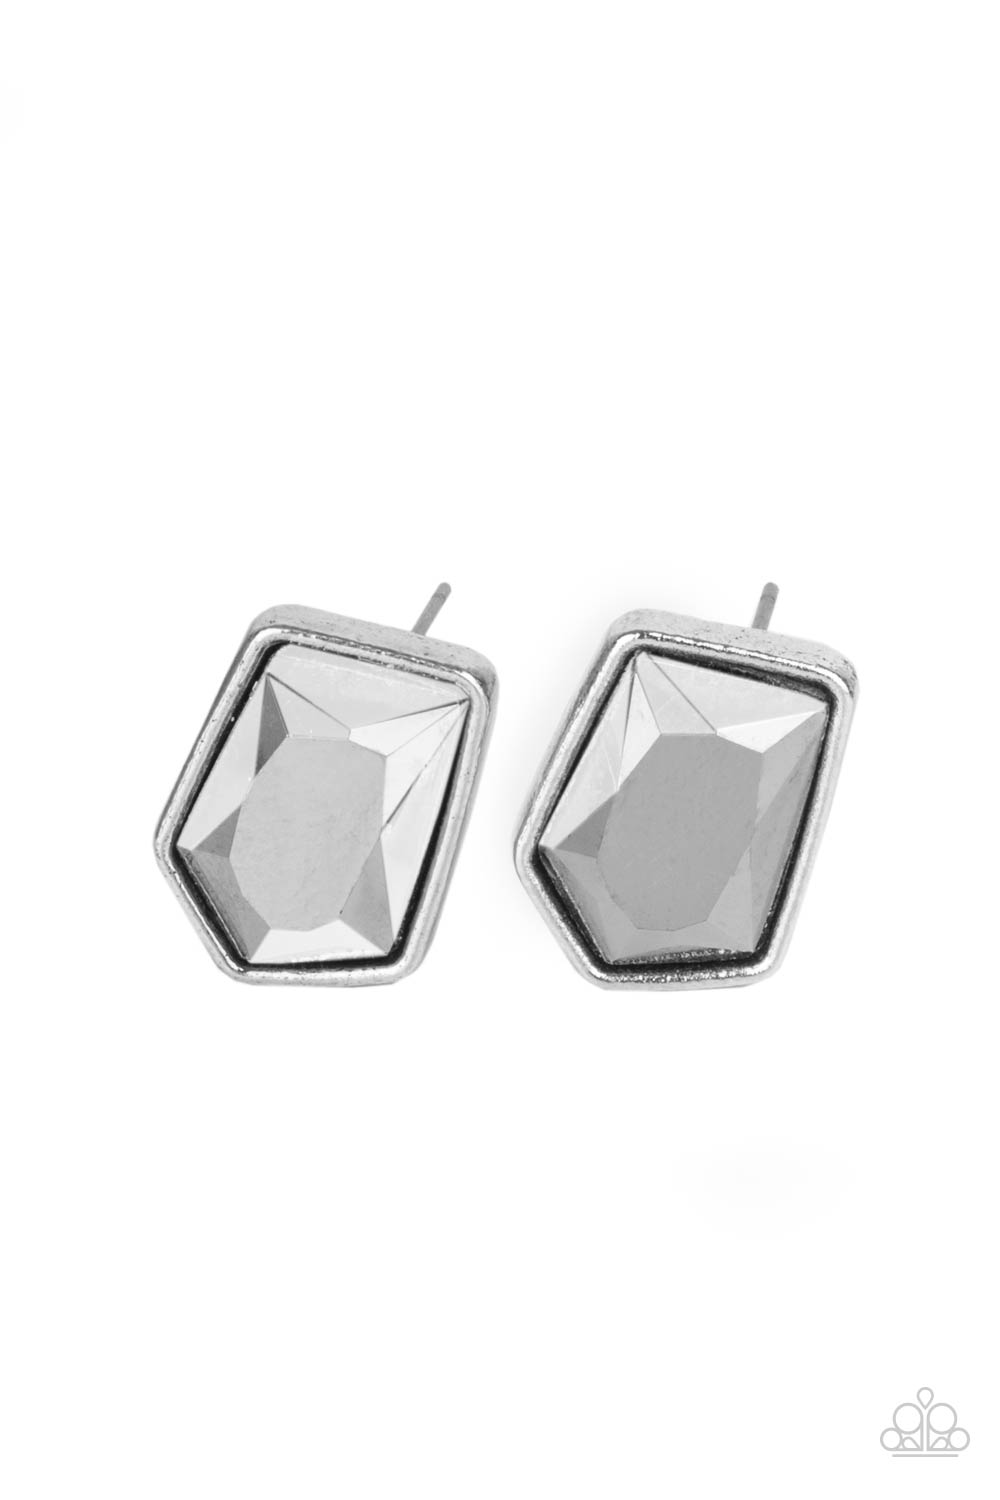 Indulge Me - silver - Paparazzi earrings